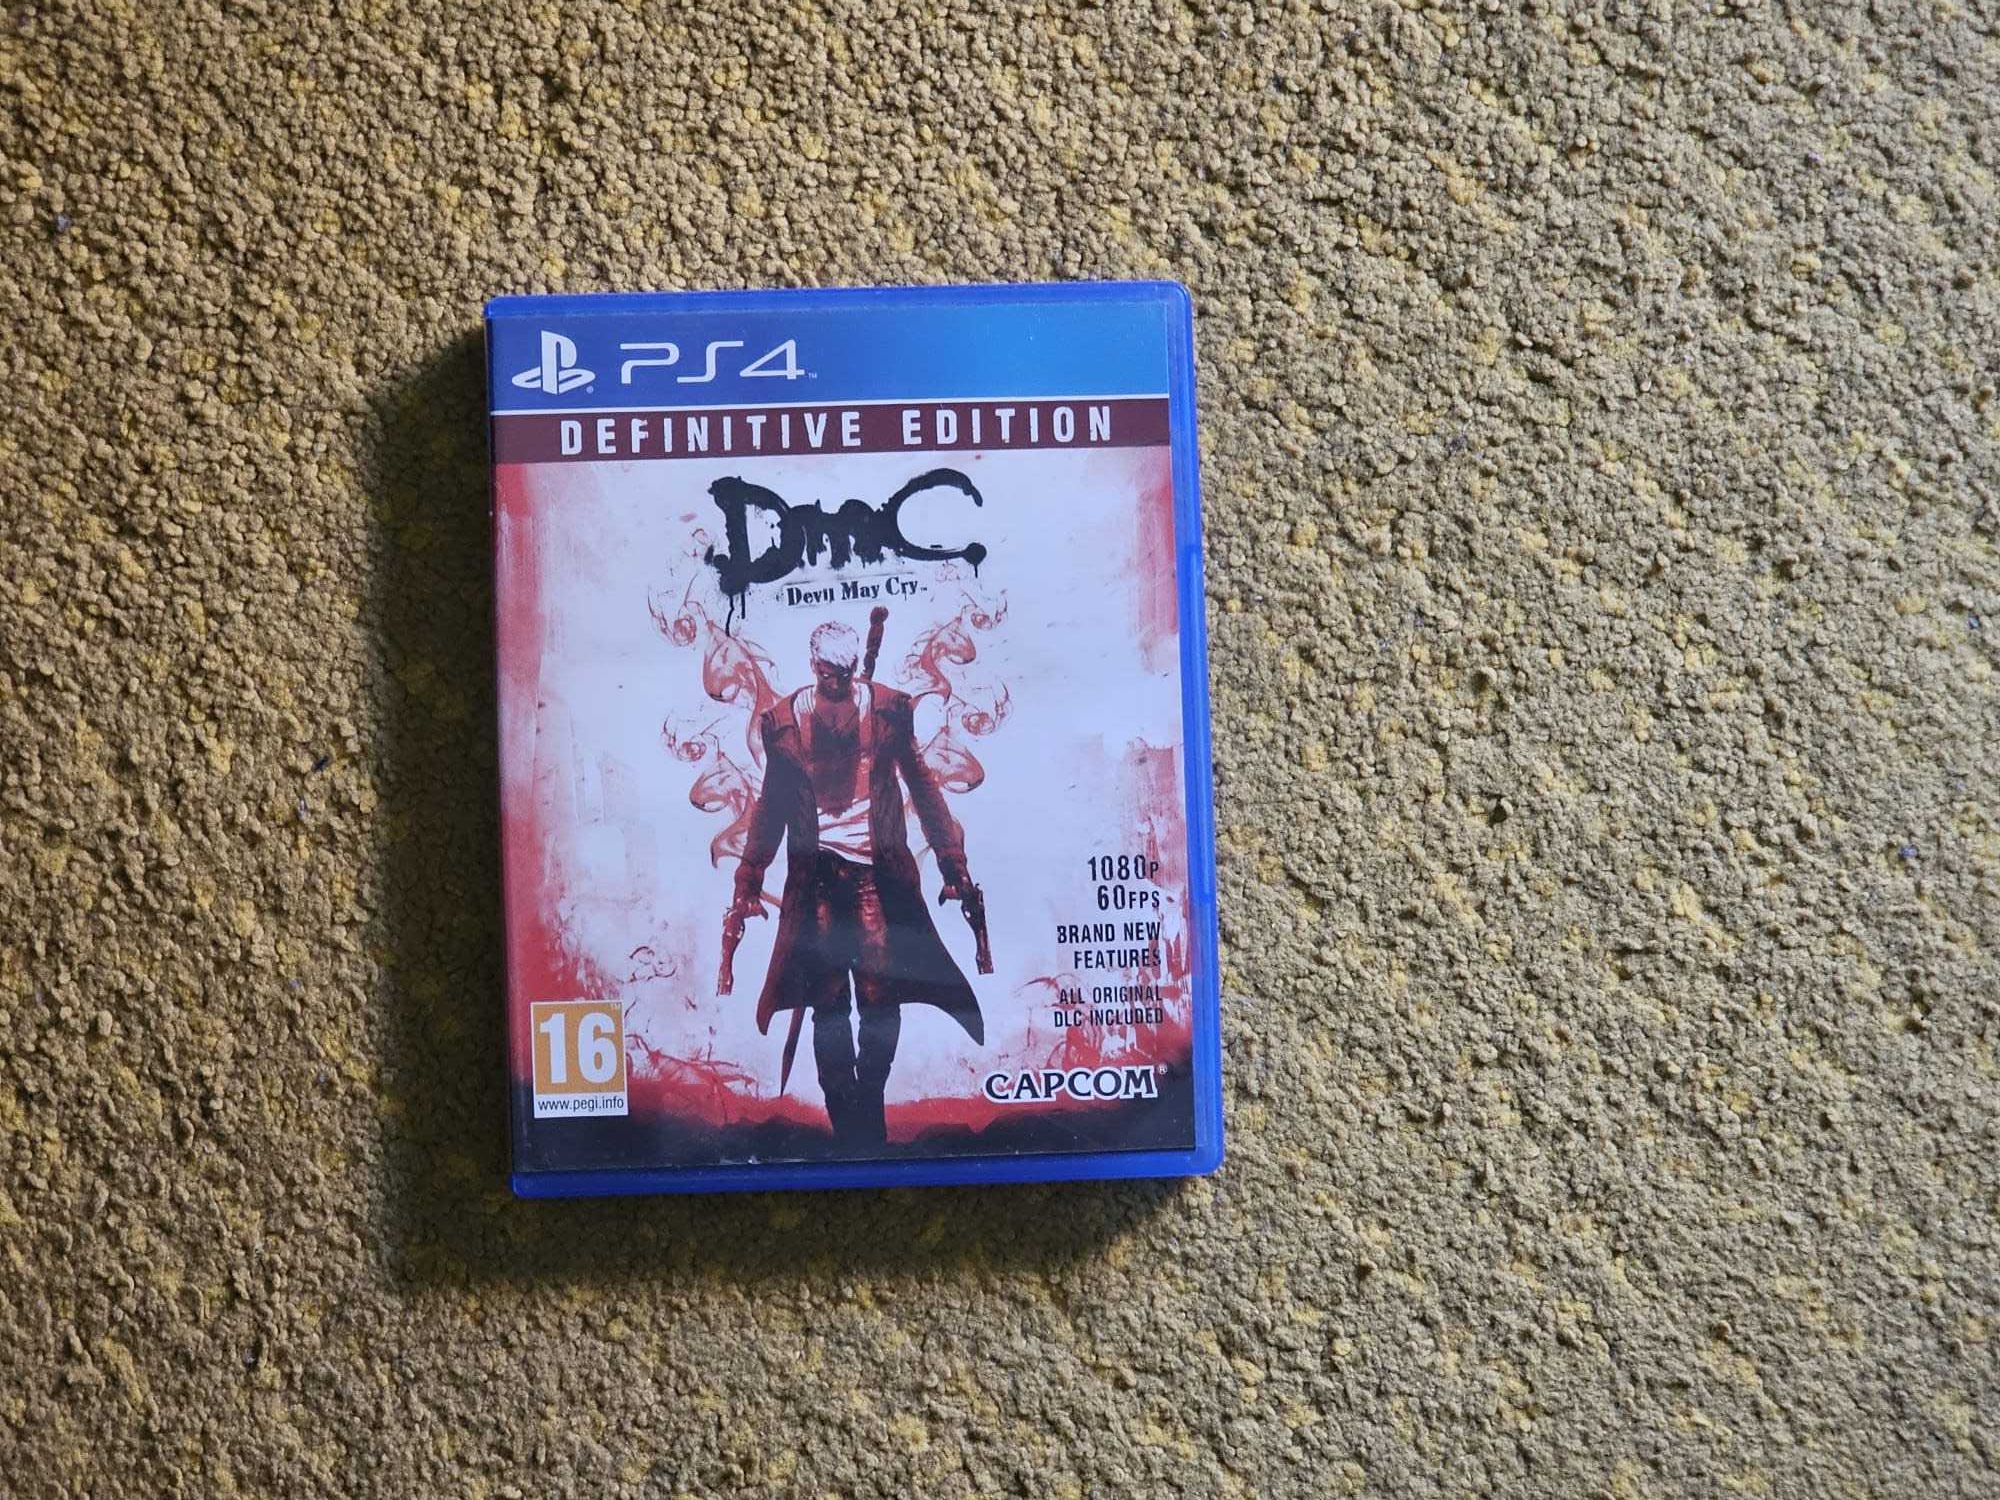 DMC Definitive Edition - PS4